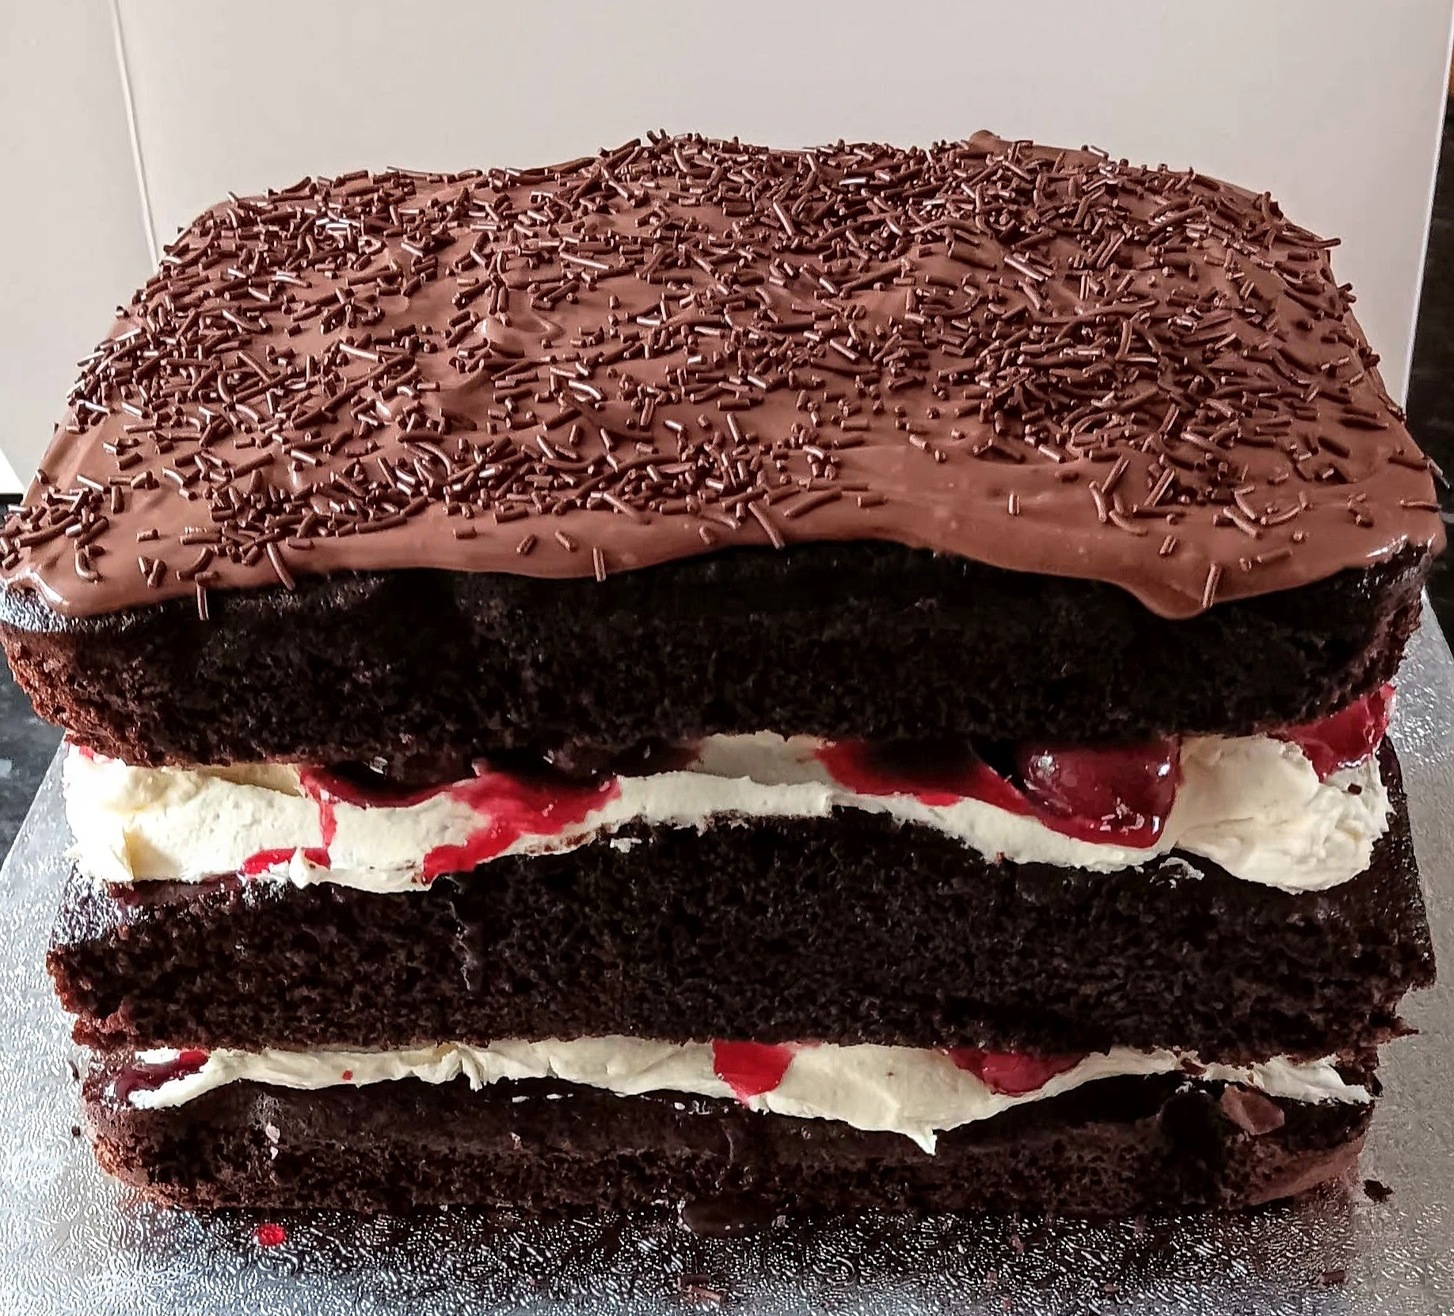 Black forest gateau style cake